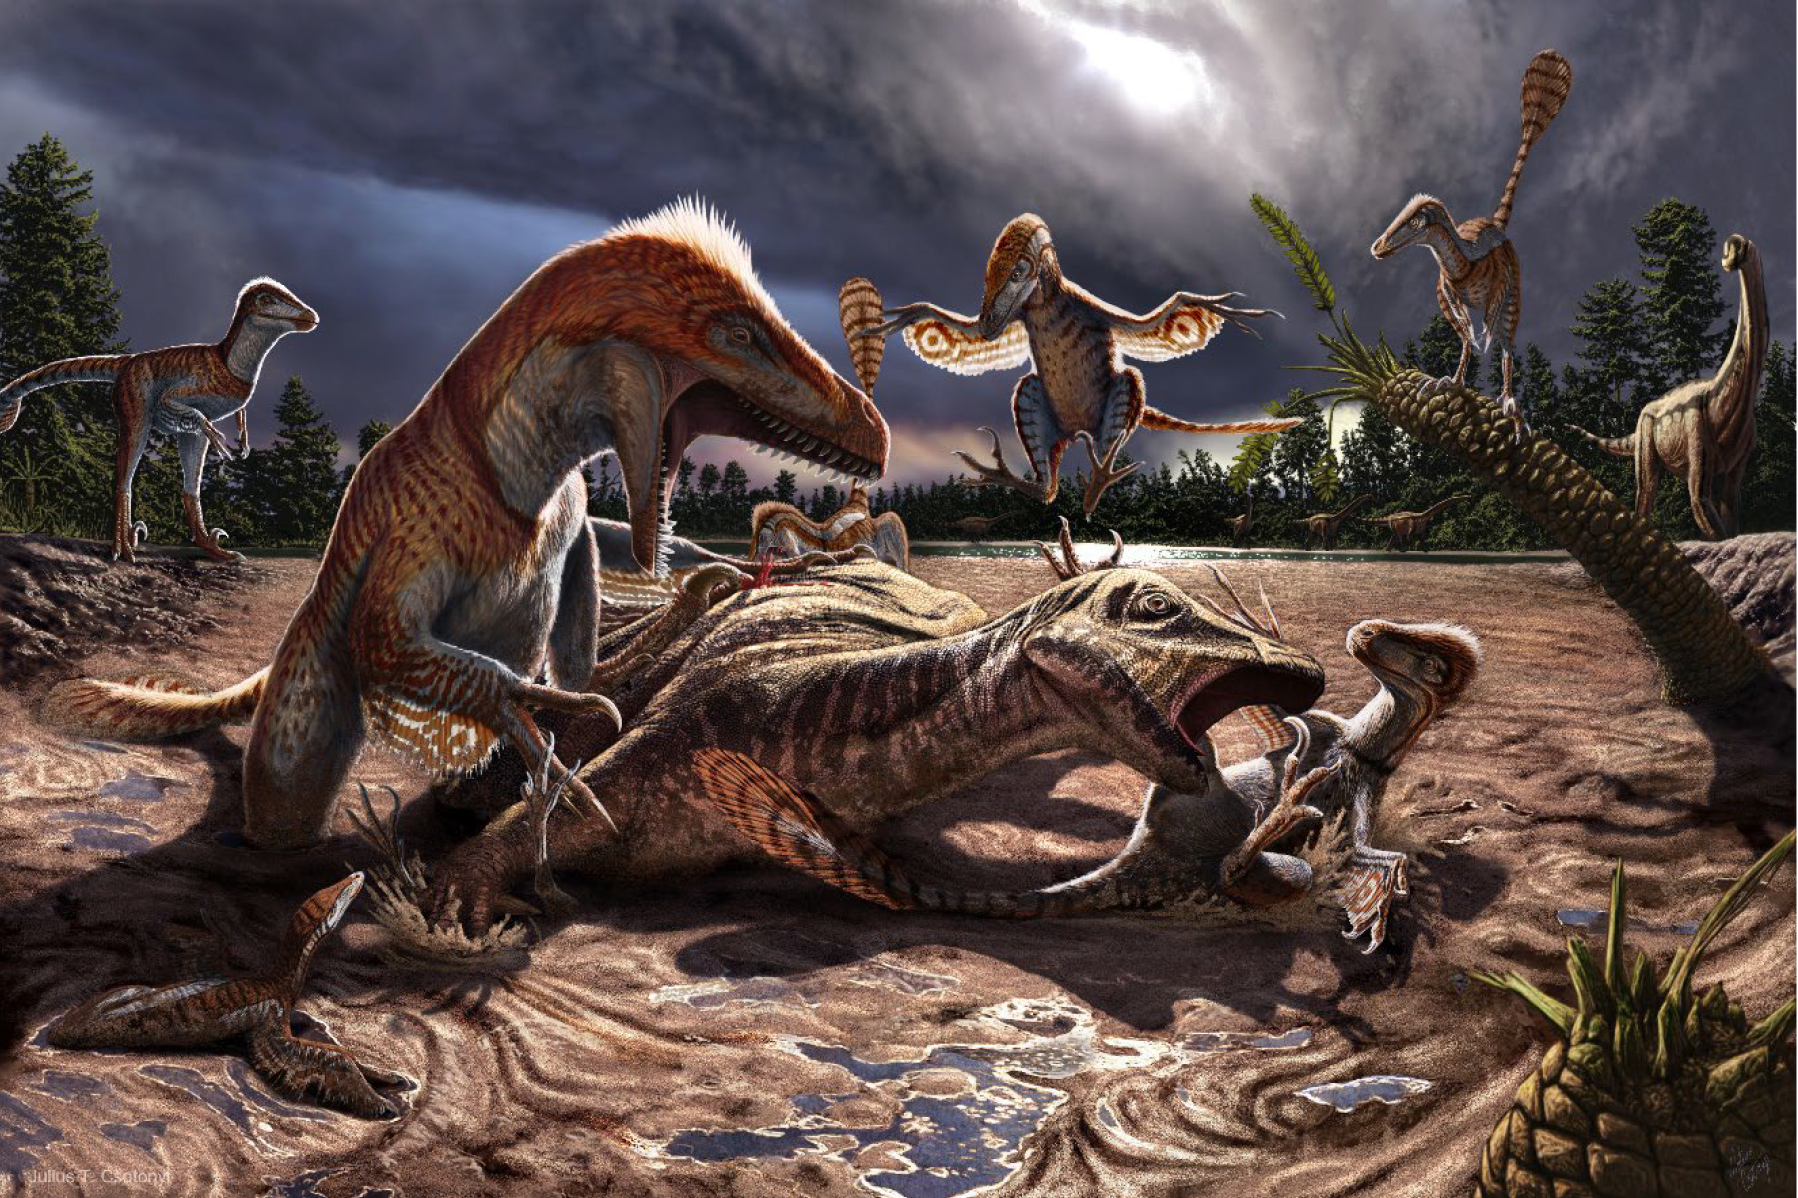 "Illustration of Utahraptors and prey trapped in quicksand deposit at Utahraptor Ridge."